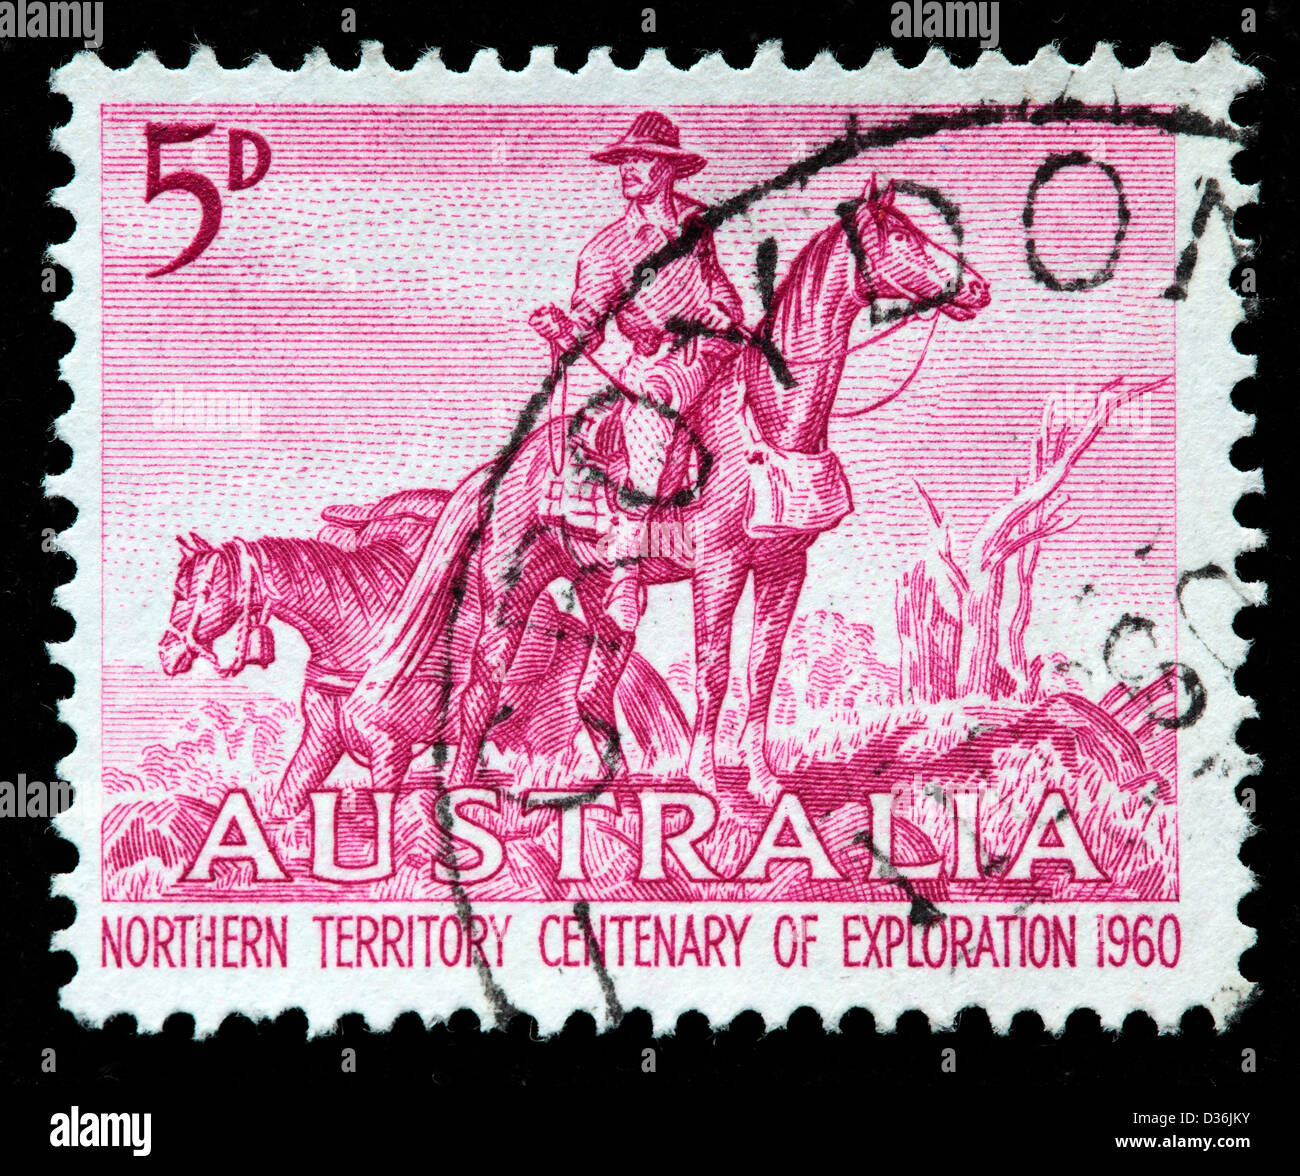 Exploration of Australia’s Northern Territory, postage stamp, Australia, 1960 Stock Photo